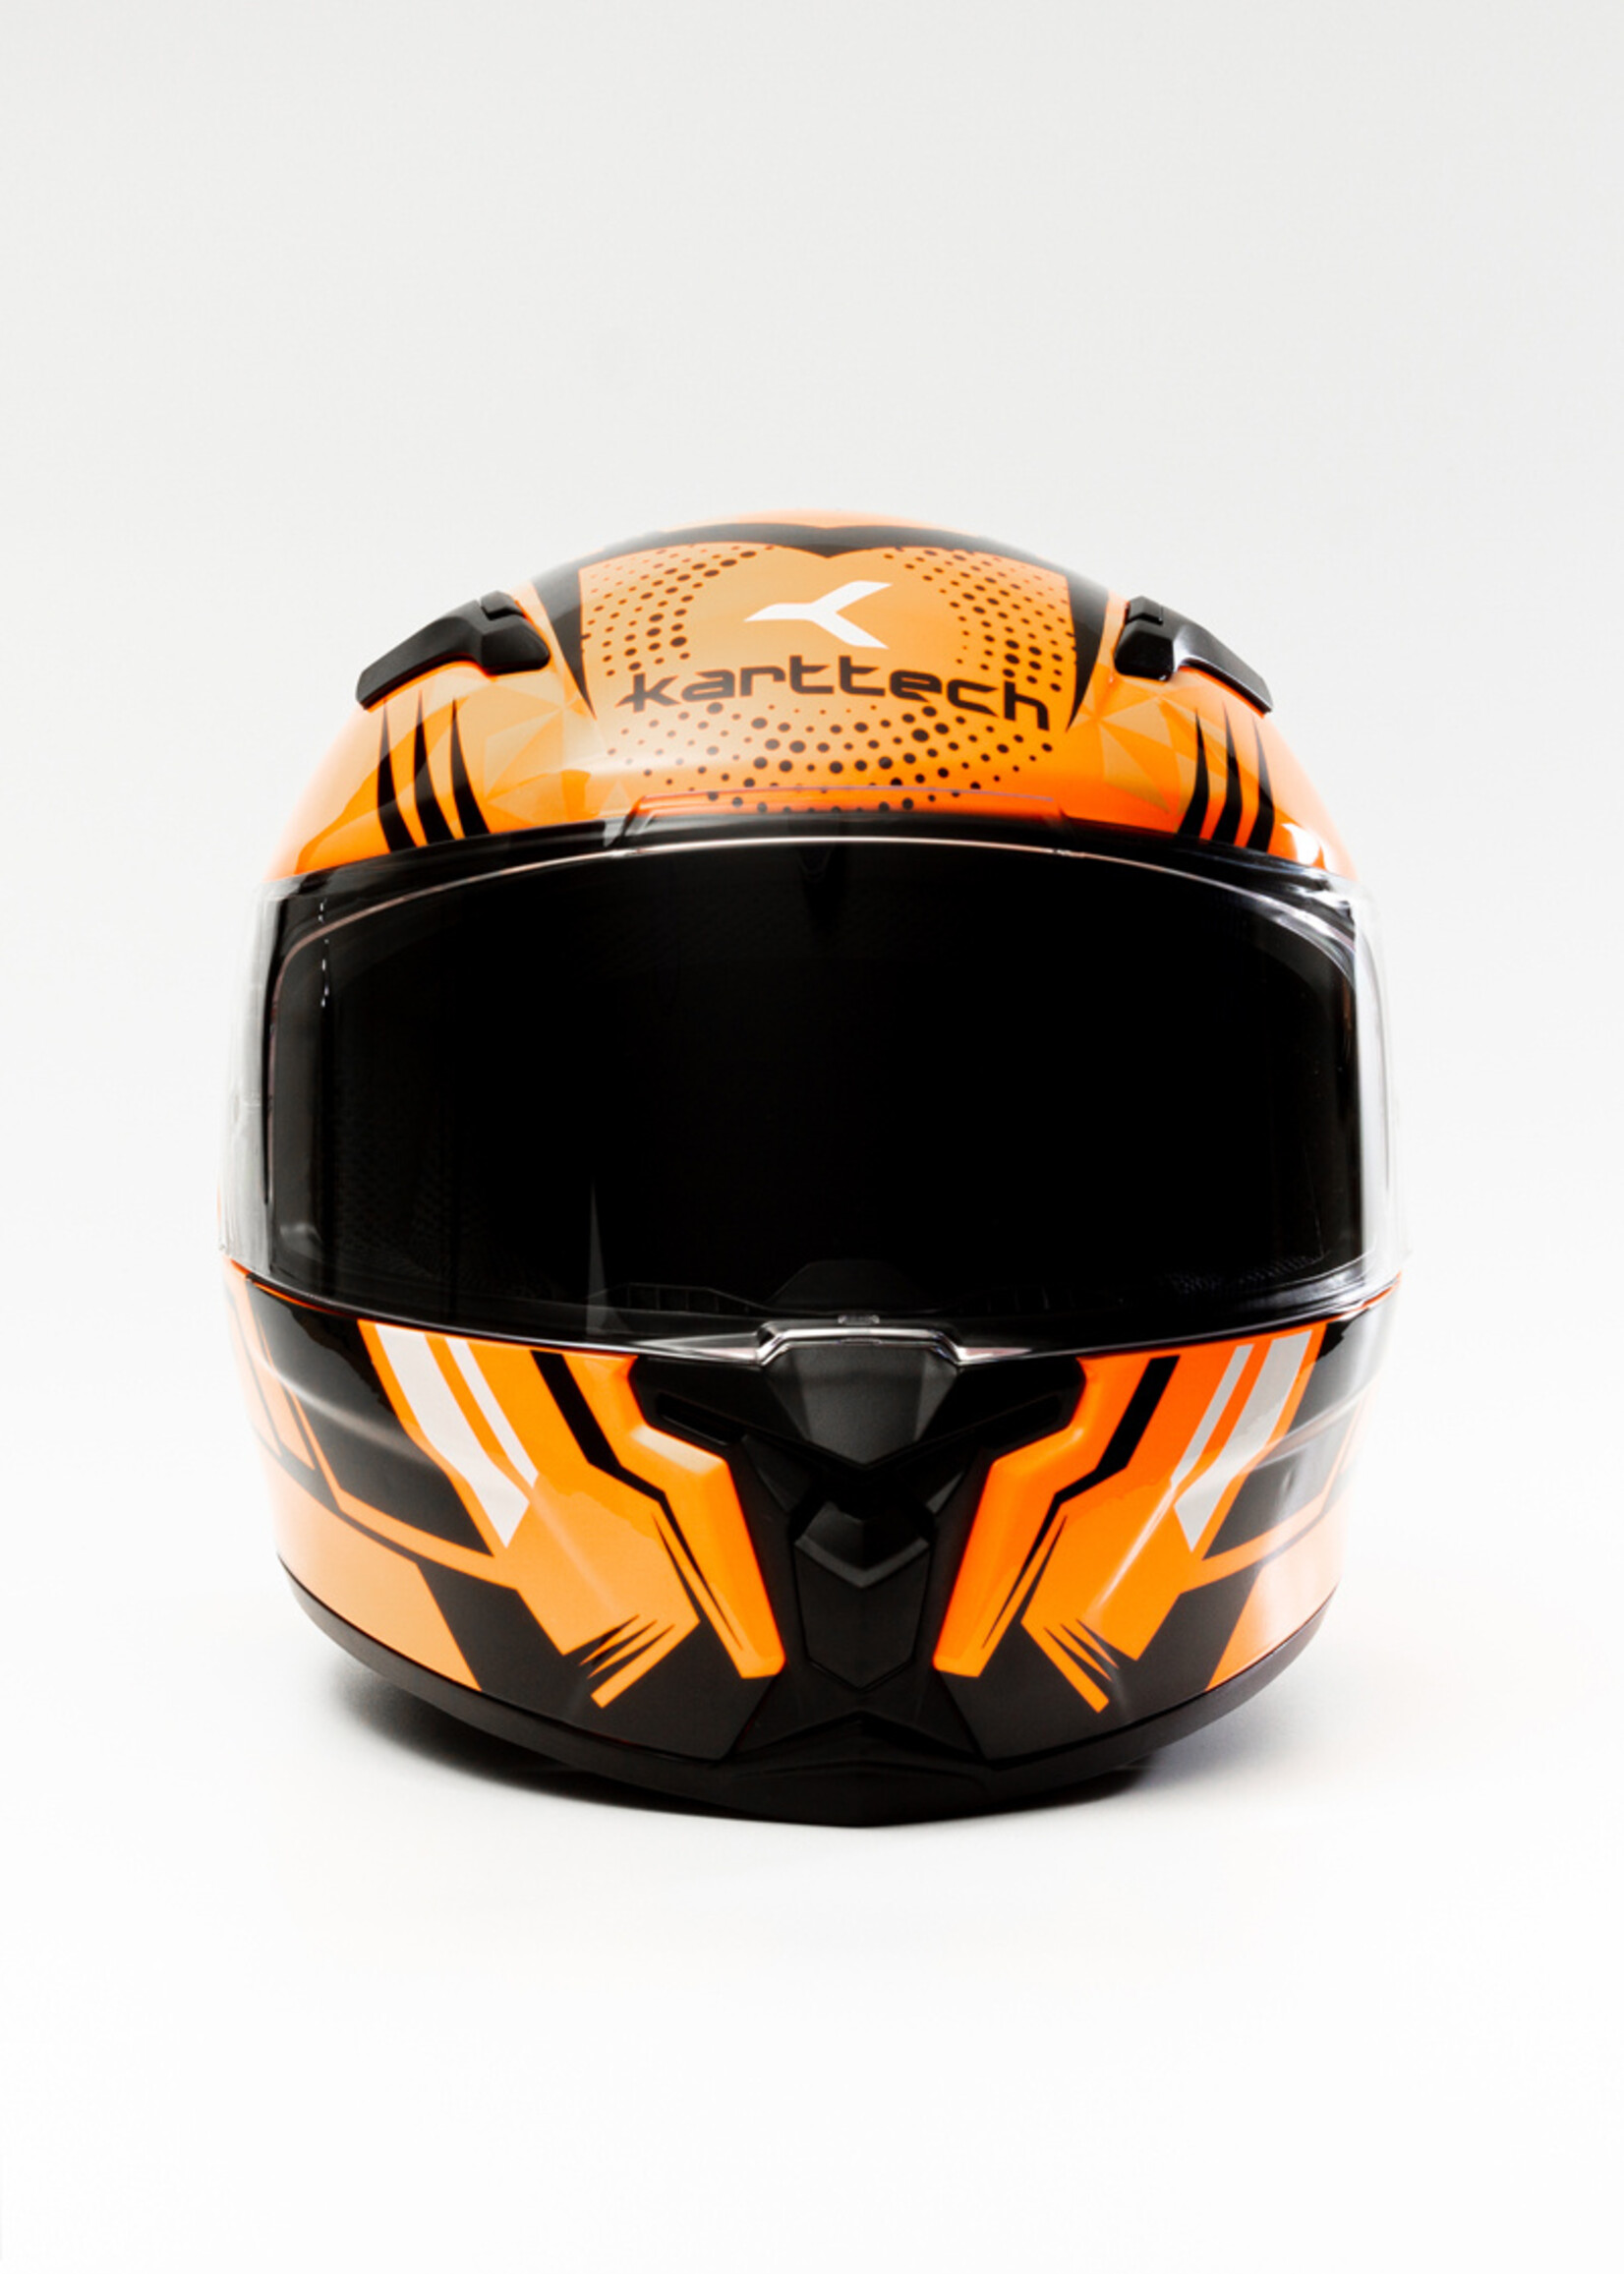 Karttech Leopard Helmet - Orange